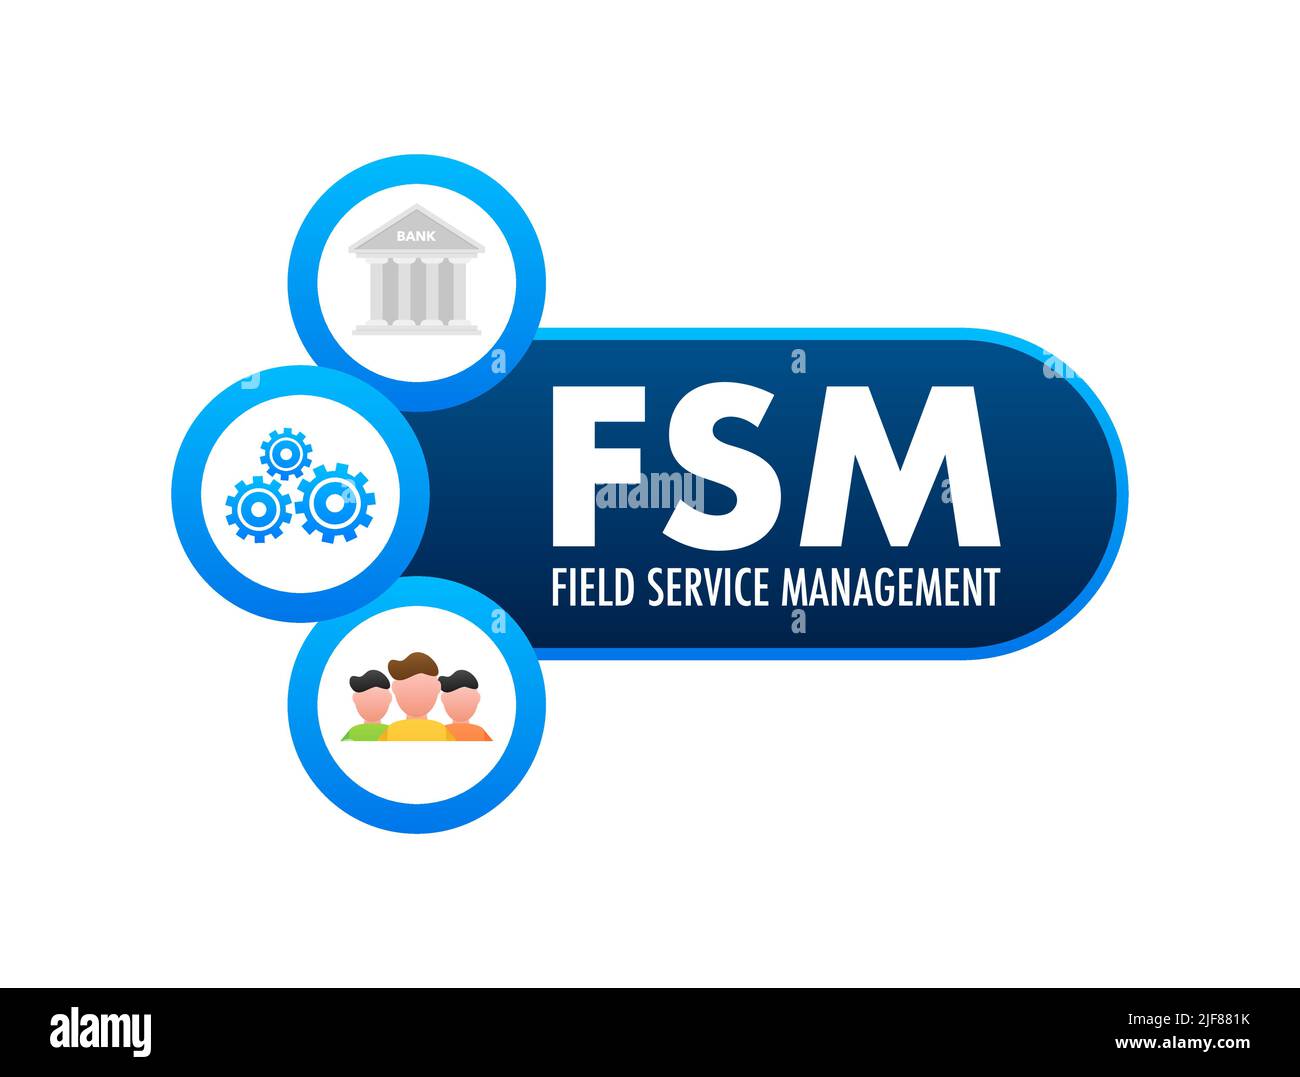 FSM - Field Service Management. Marketingmaterialien. Vektorgrafik. Stock Vektor